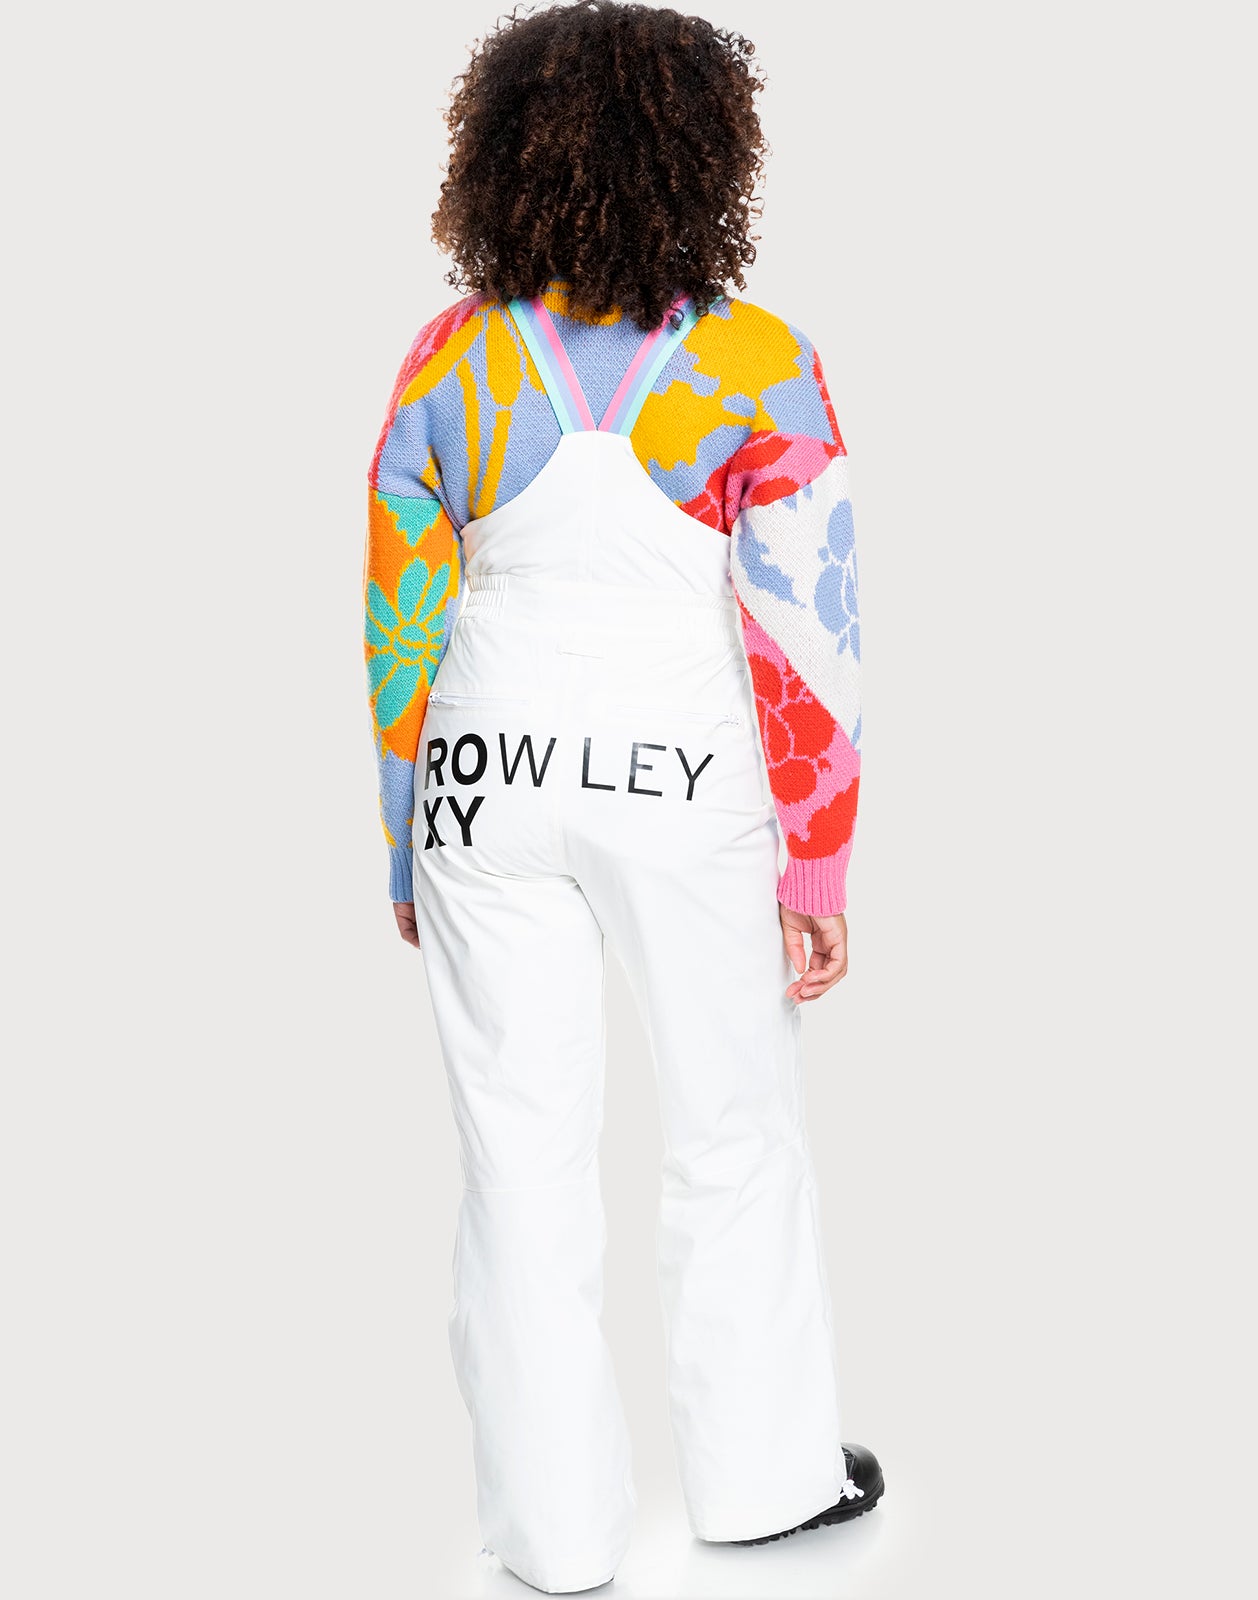 Rowley x Roxy Insulated Bib Pant